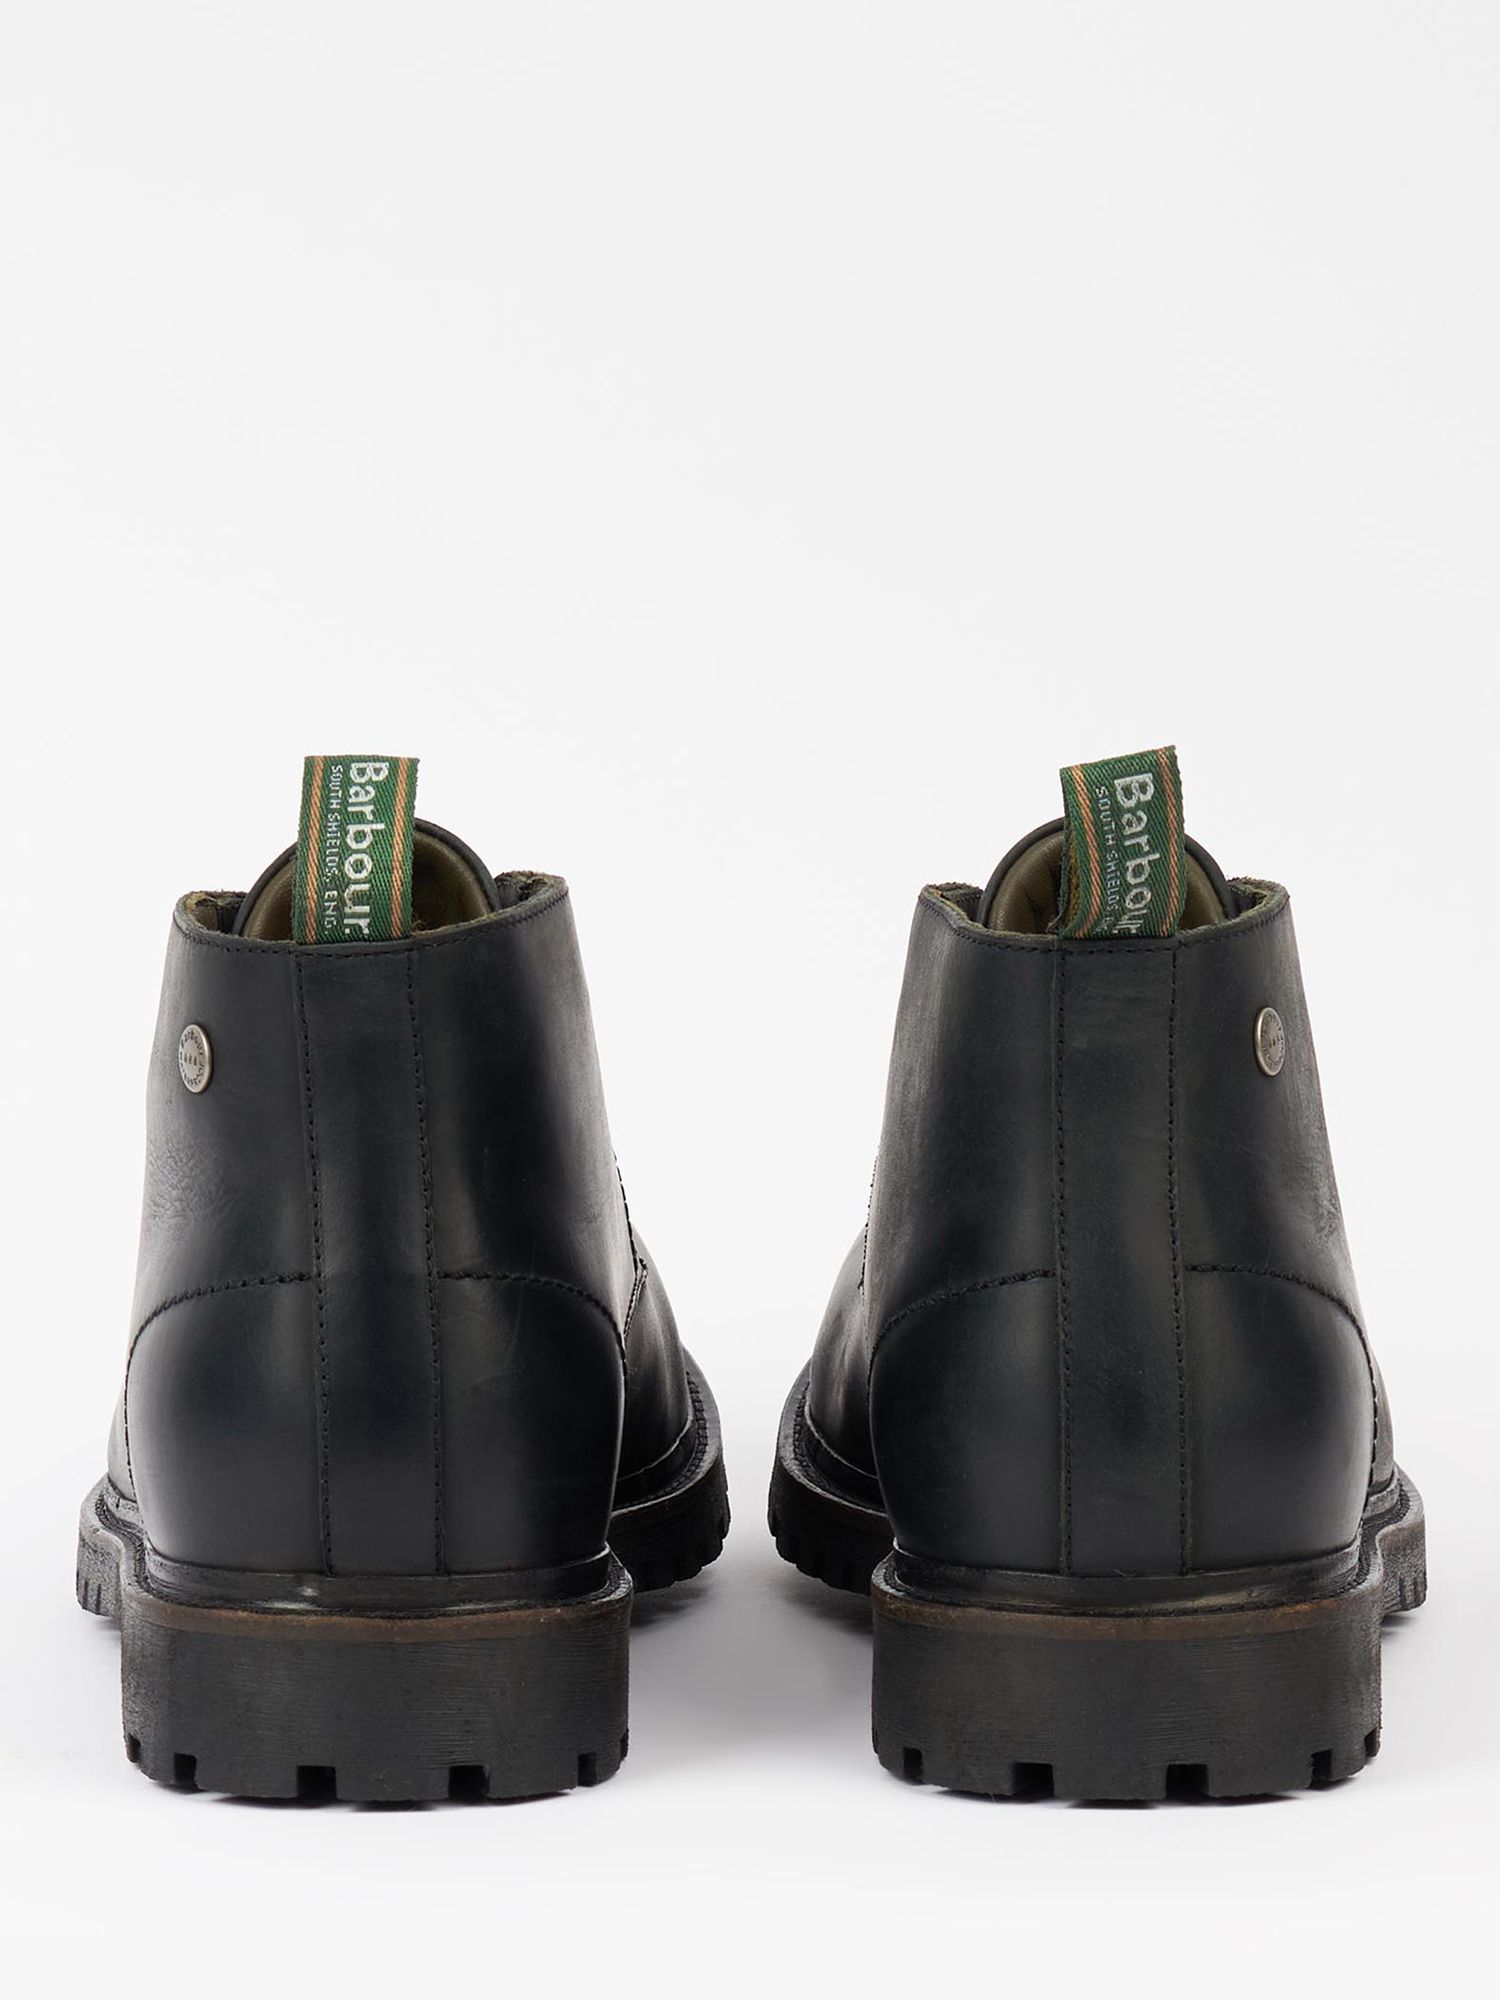 Barbour Cairngorm Waterproof Chukka Boots, Black at John Lewis & Partners